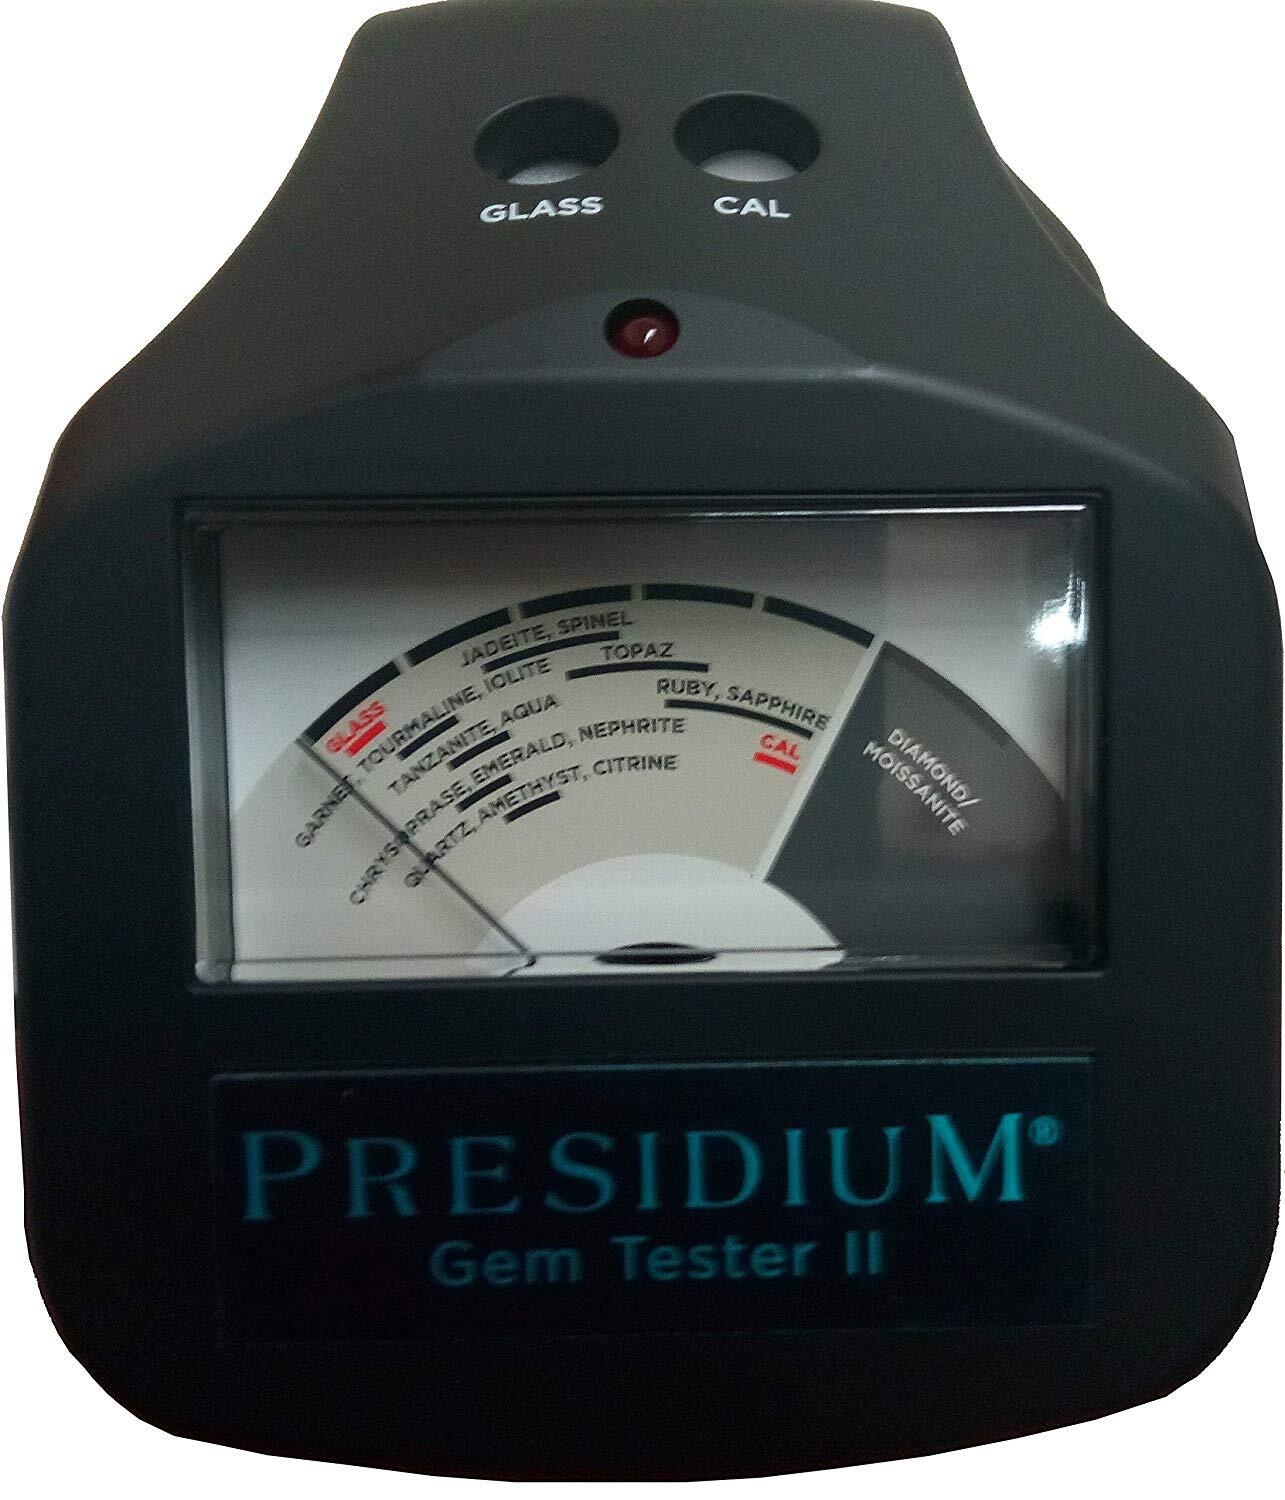 Presidium Gemstone Tester PGT II